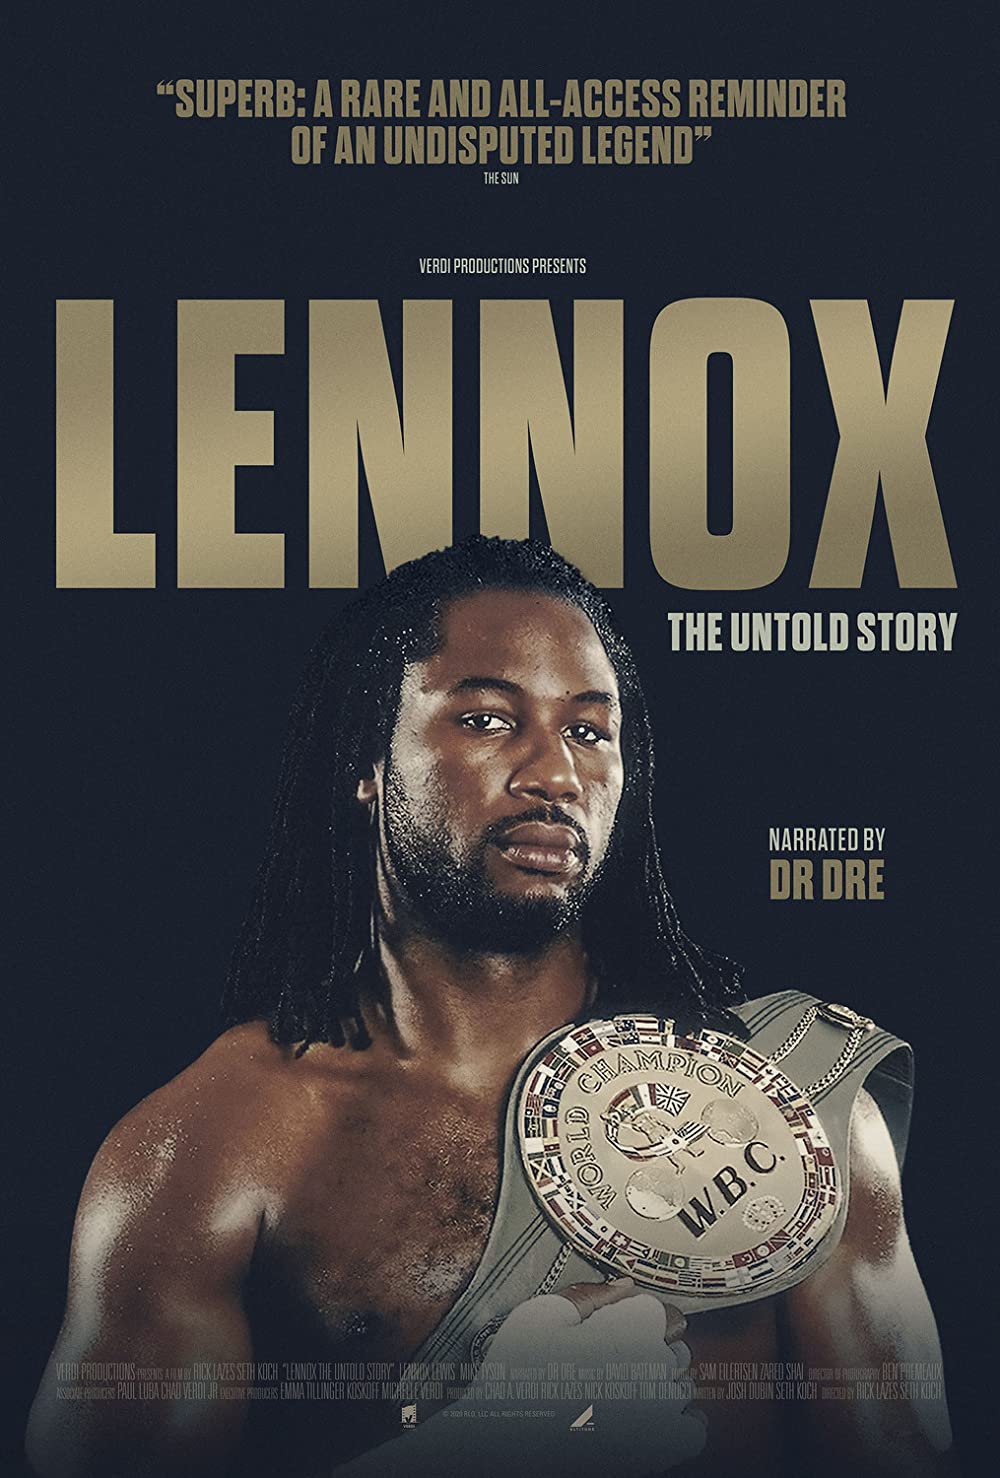 دانلود مستند  لنوکس لوئیس : Lennox Lewis The Untold Story 2020